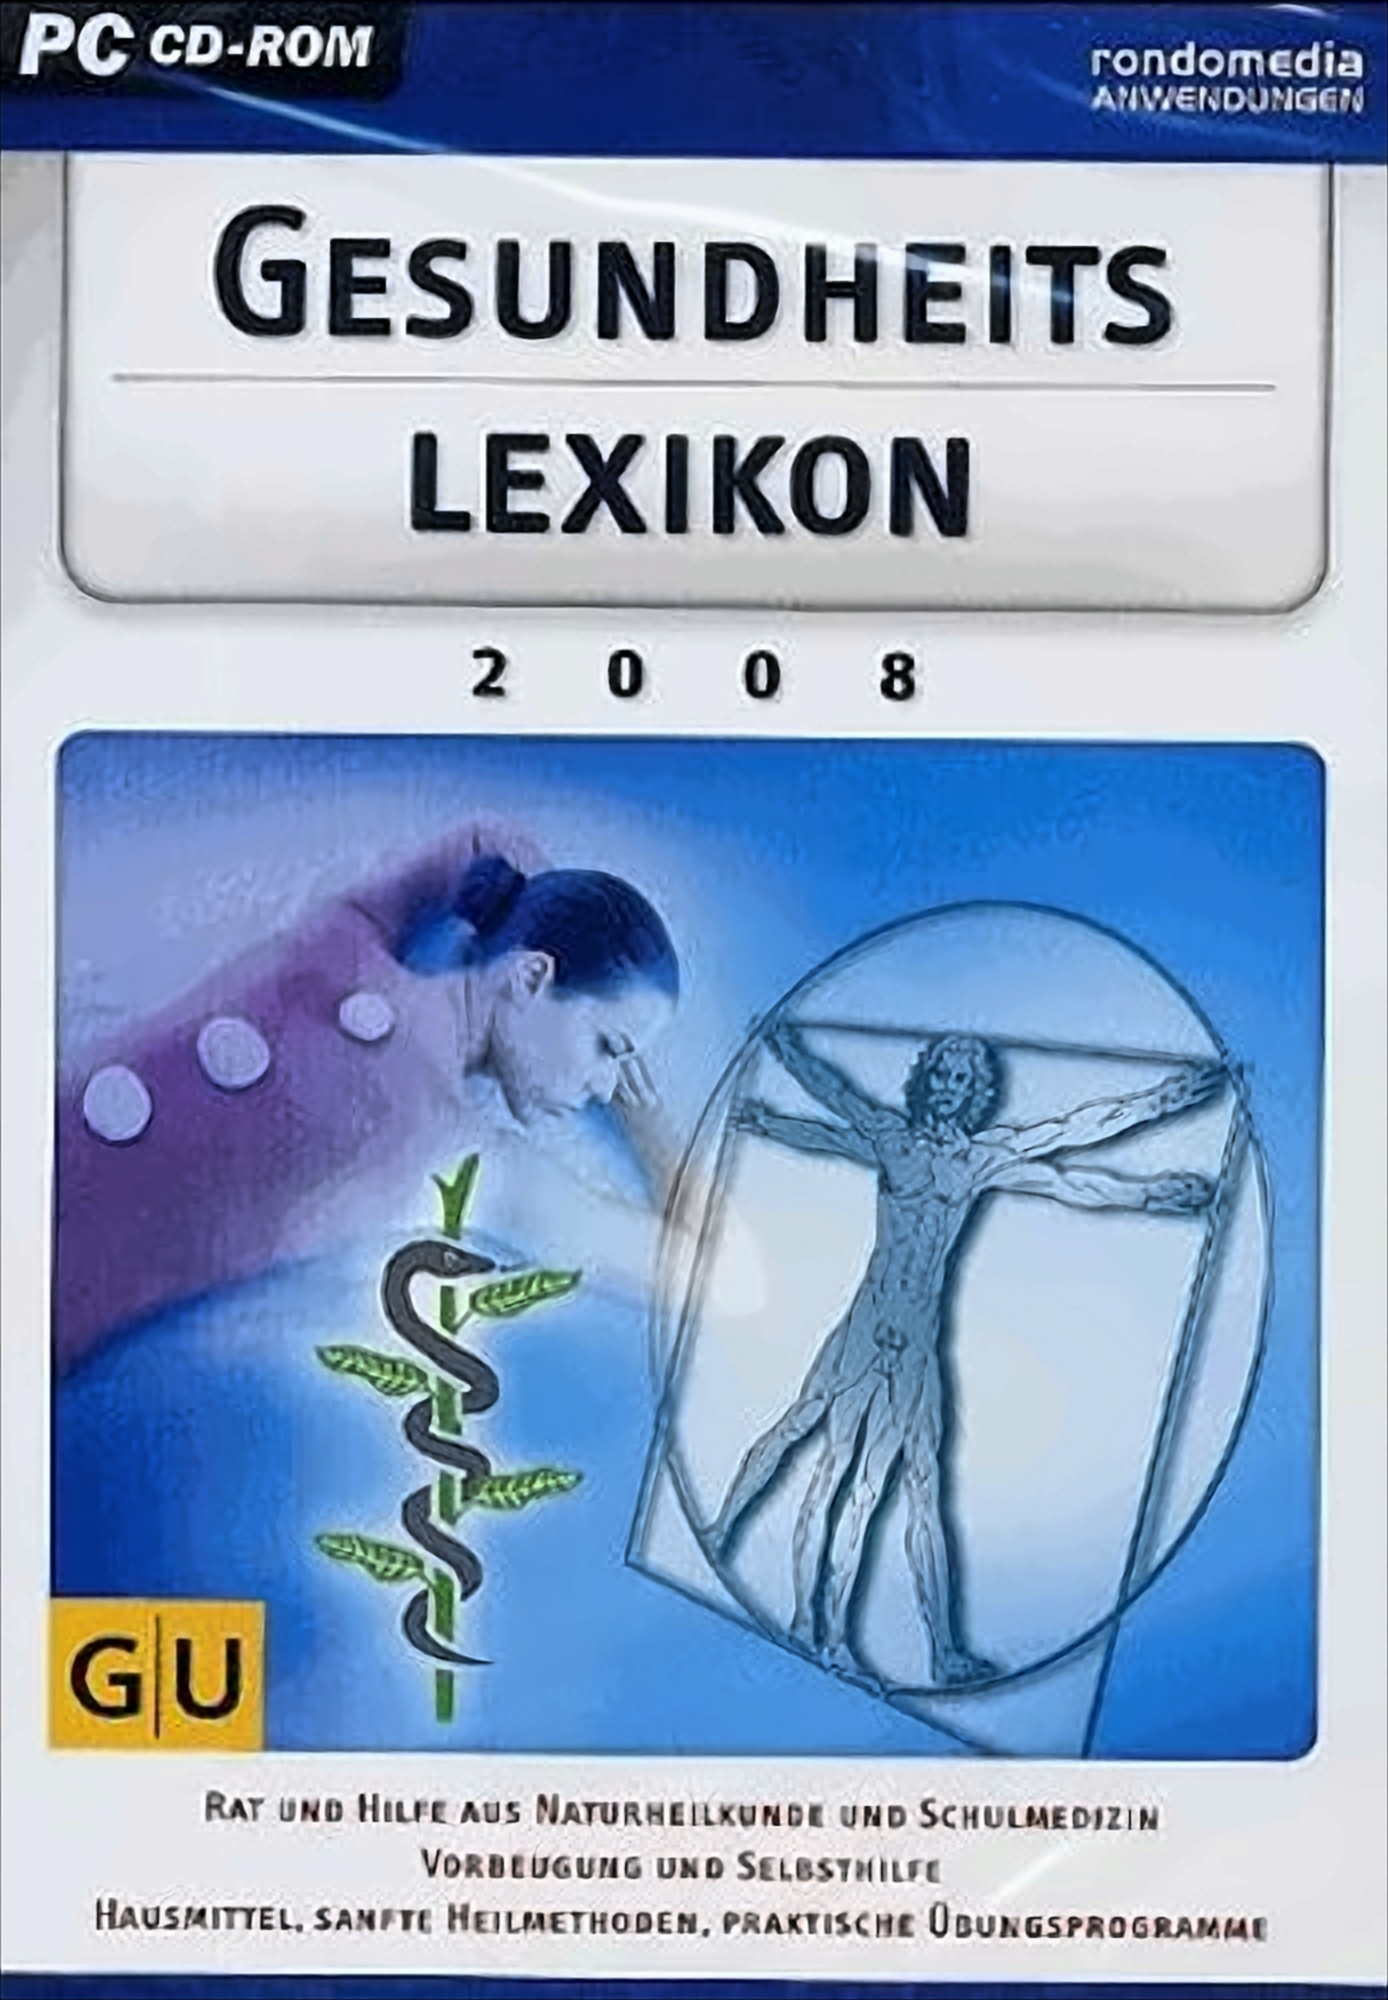 Gesundheitslexikon 2008 - [PC]